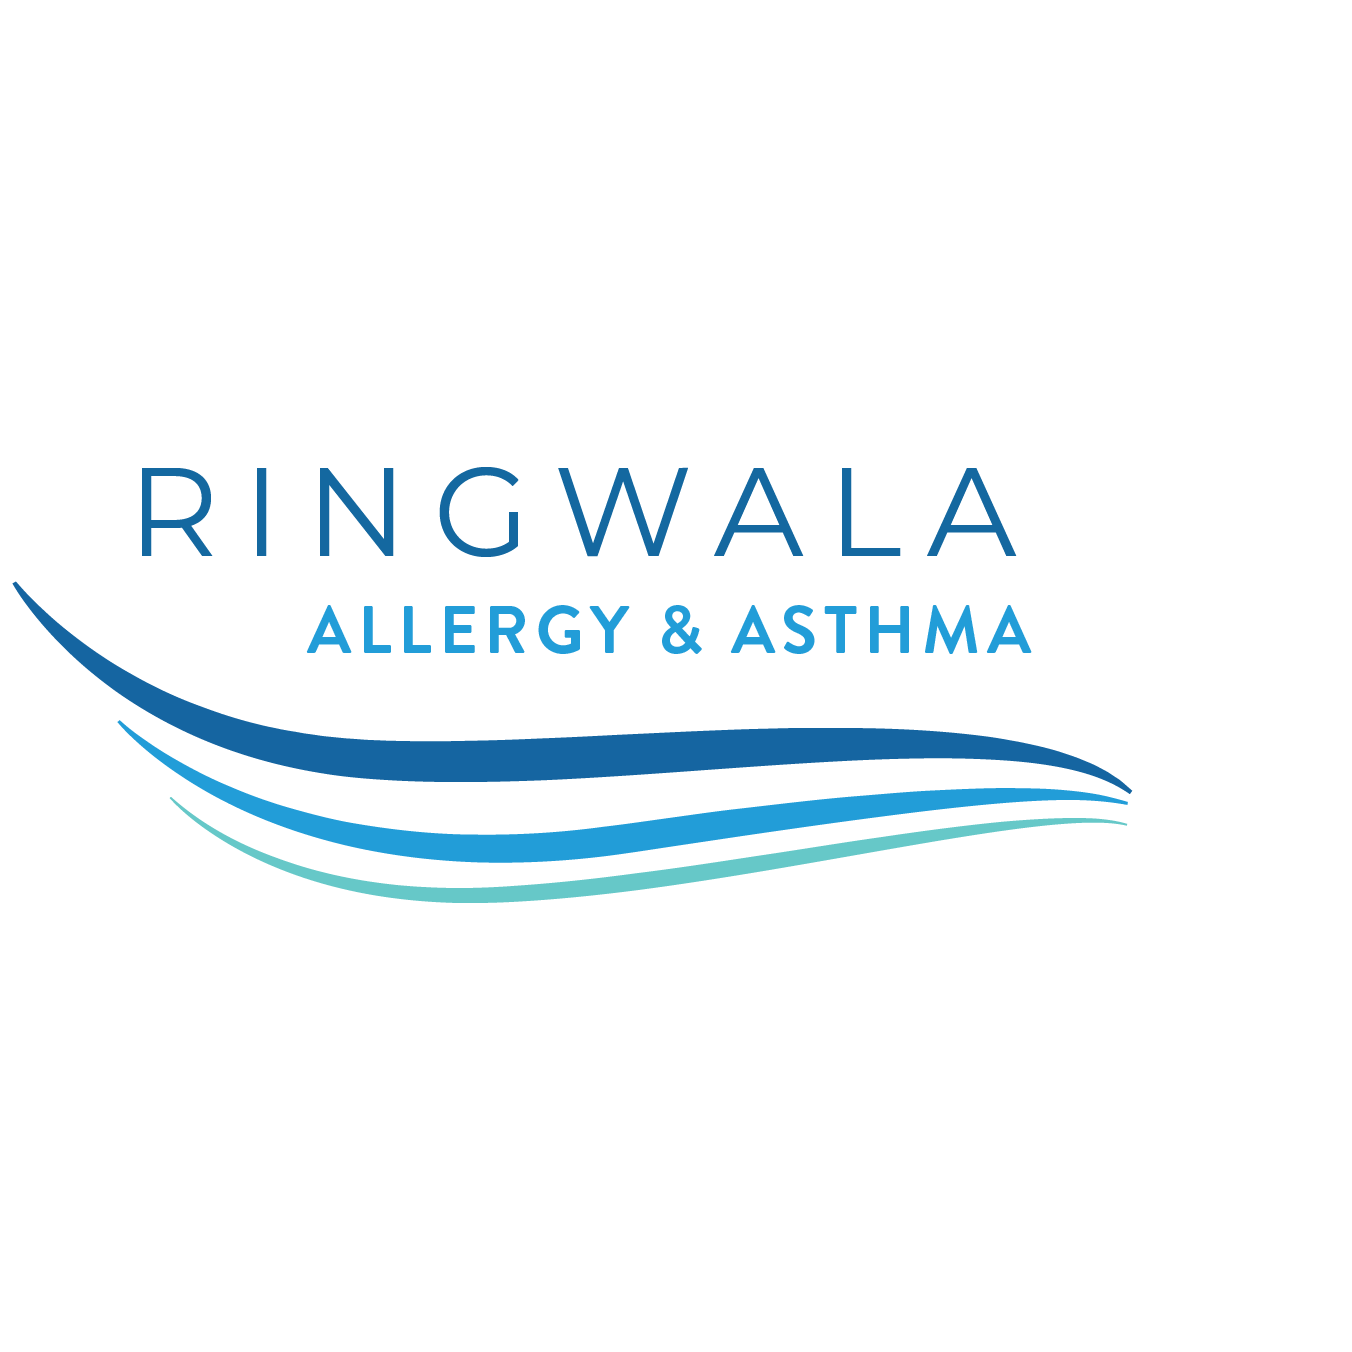 Ringwala Allergy & Asthma Kenosha (262)657-9390